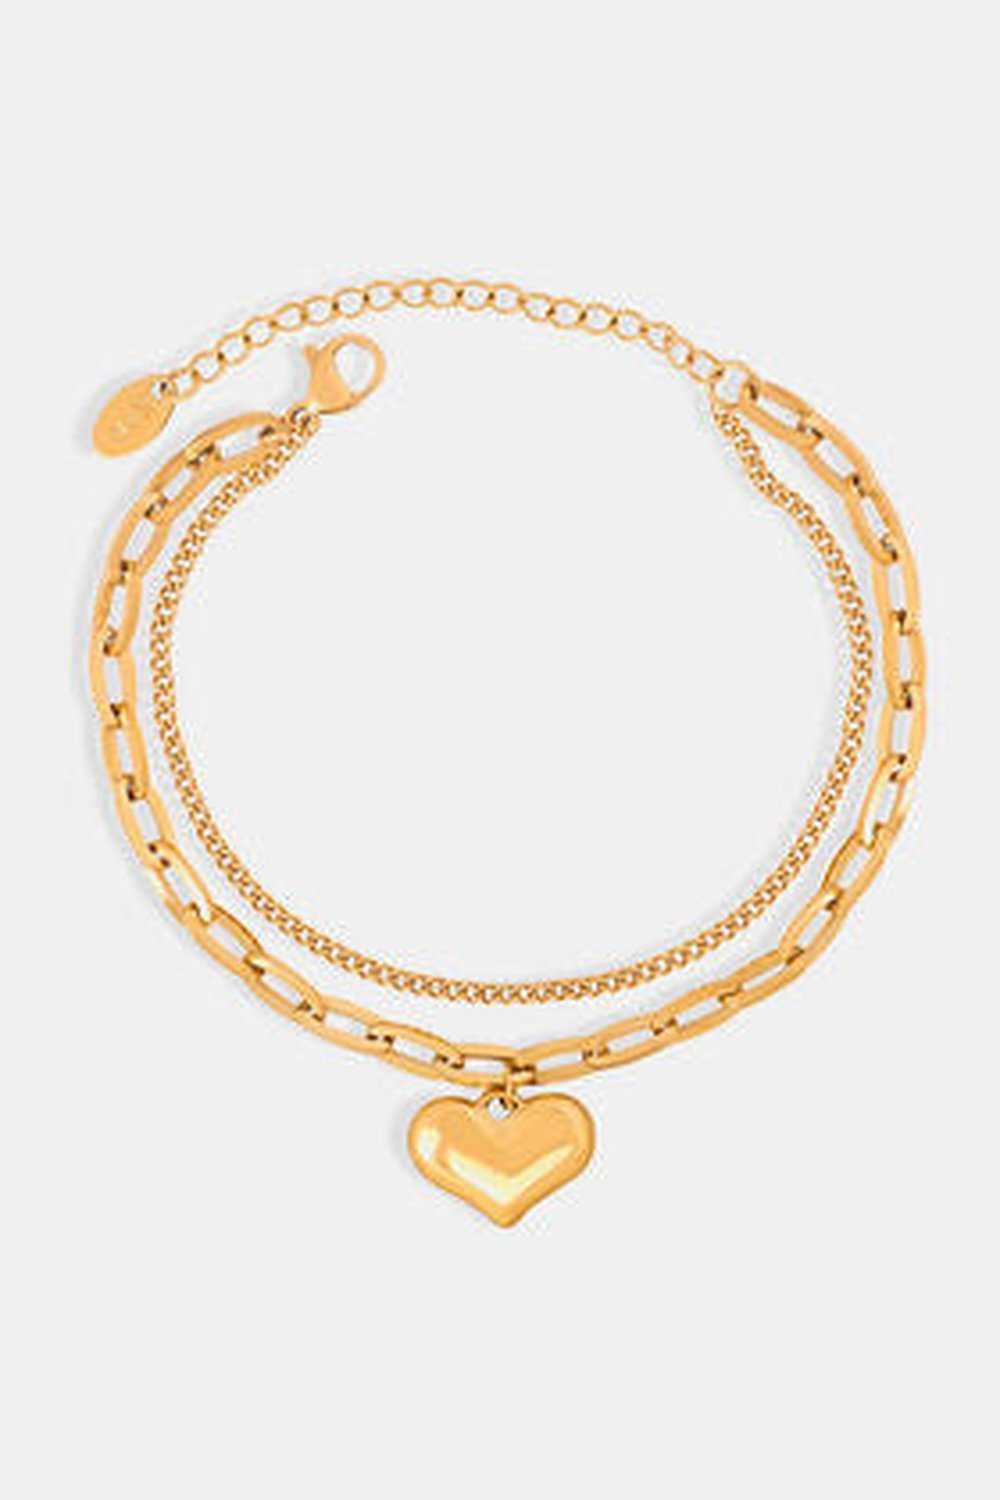 Heart Shape Lobster Closure Chain Bracelet - Bracelets - FITGGINS